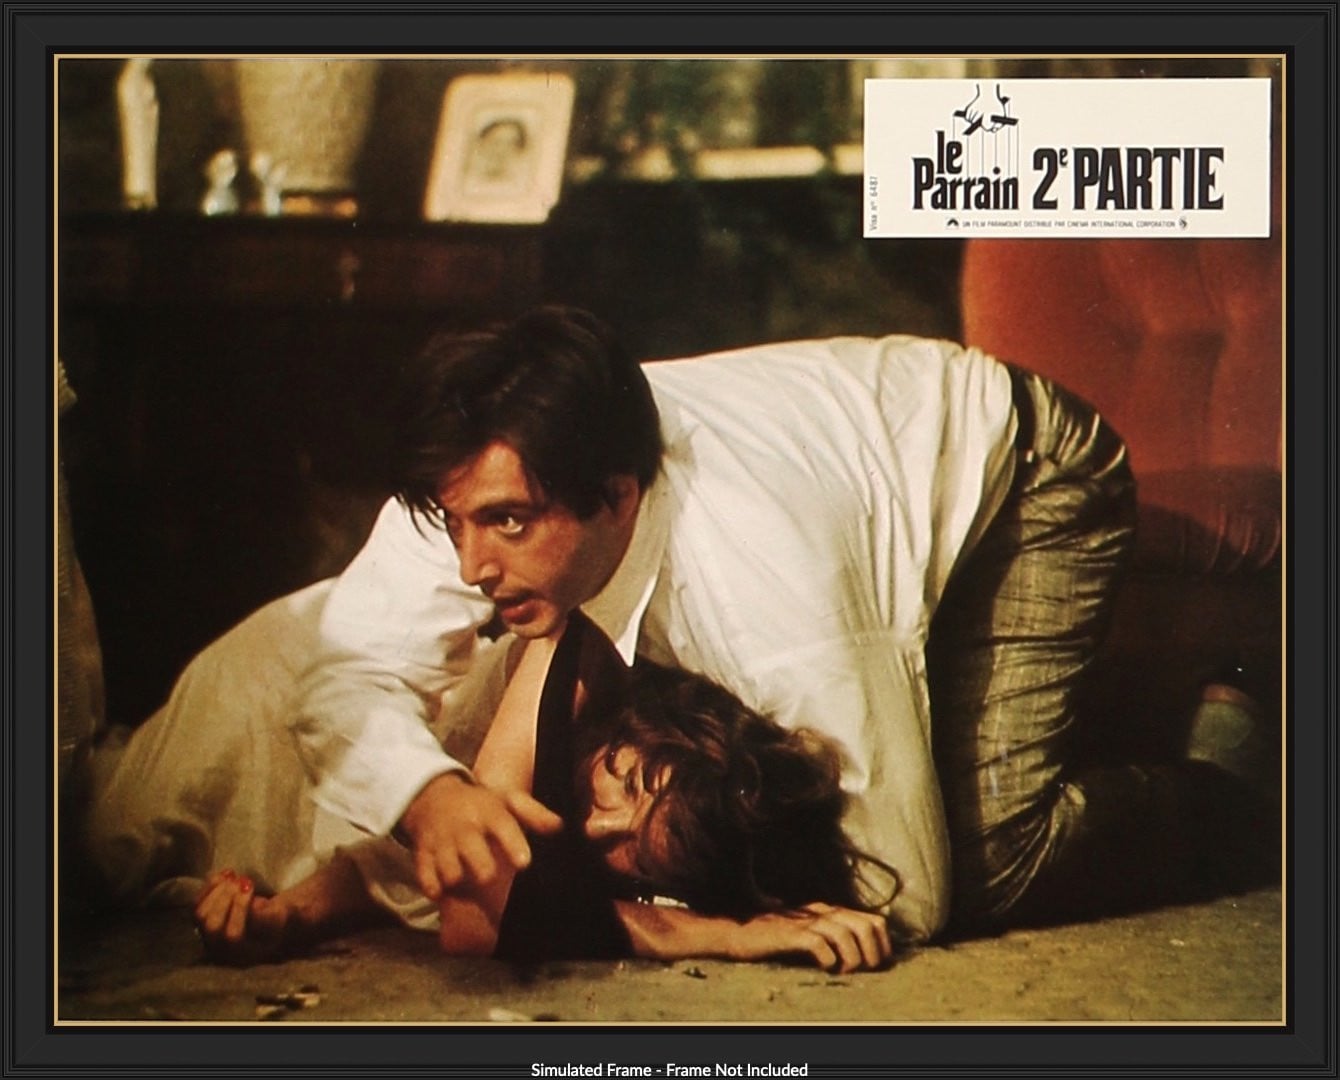 Godfather Part II (1974) original movie poster for sale at Original Film Art